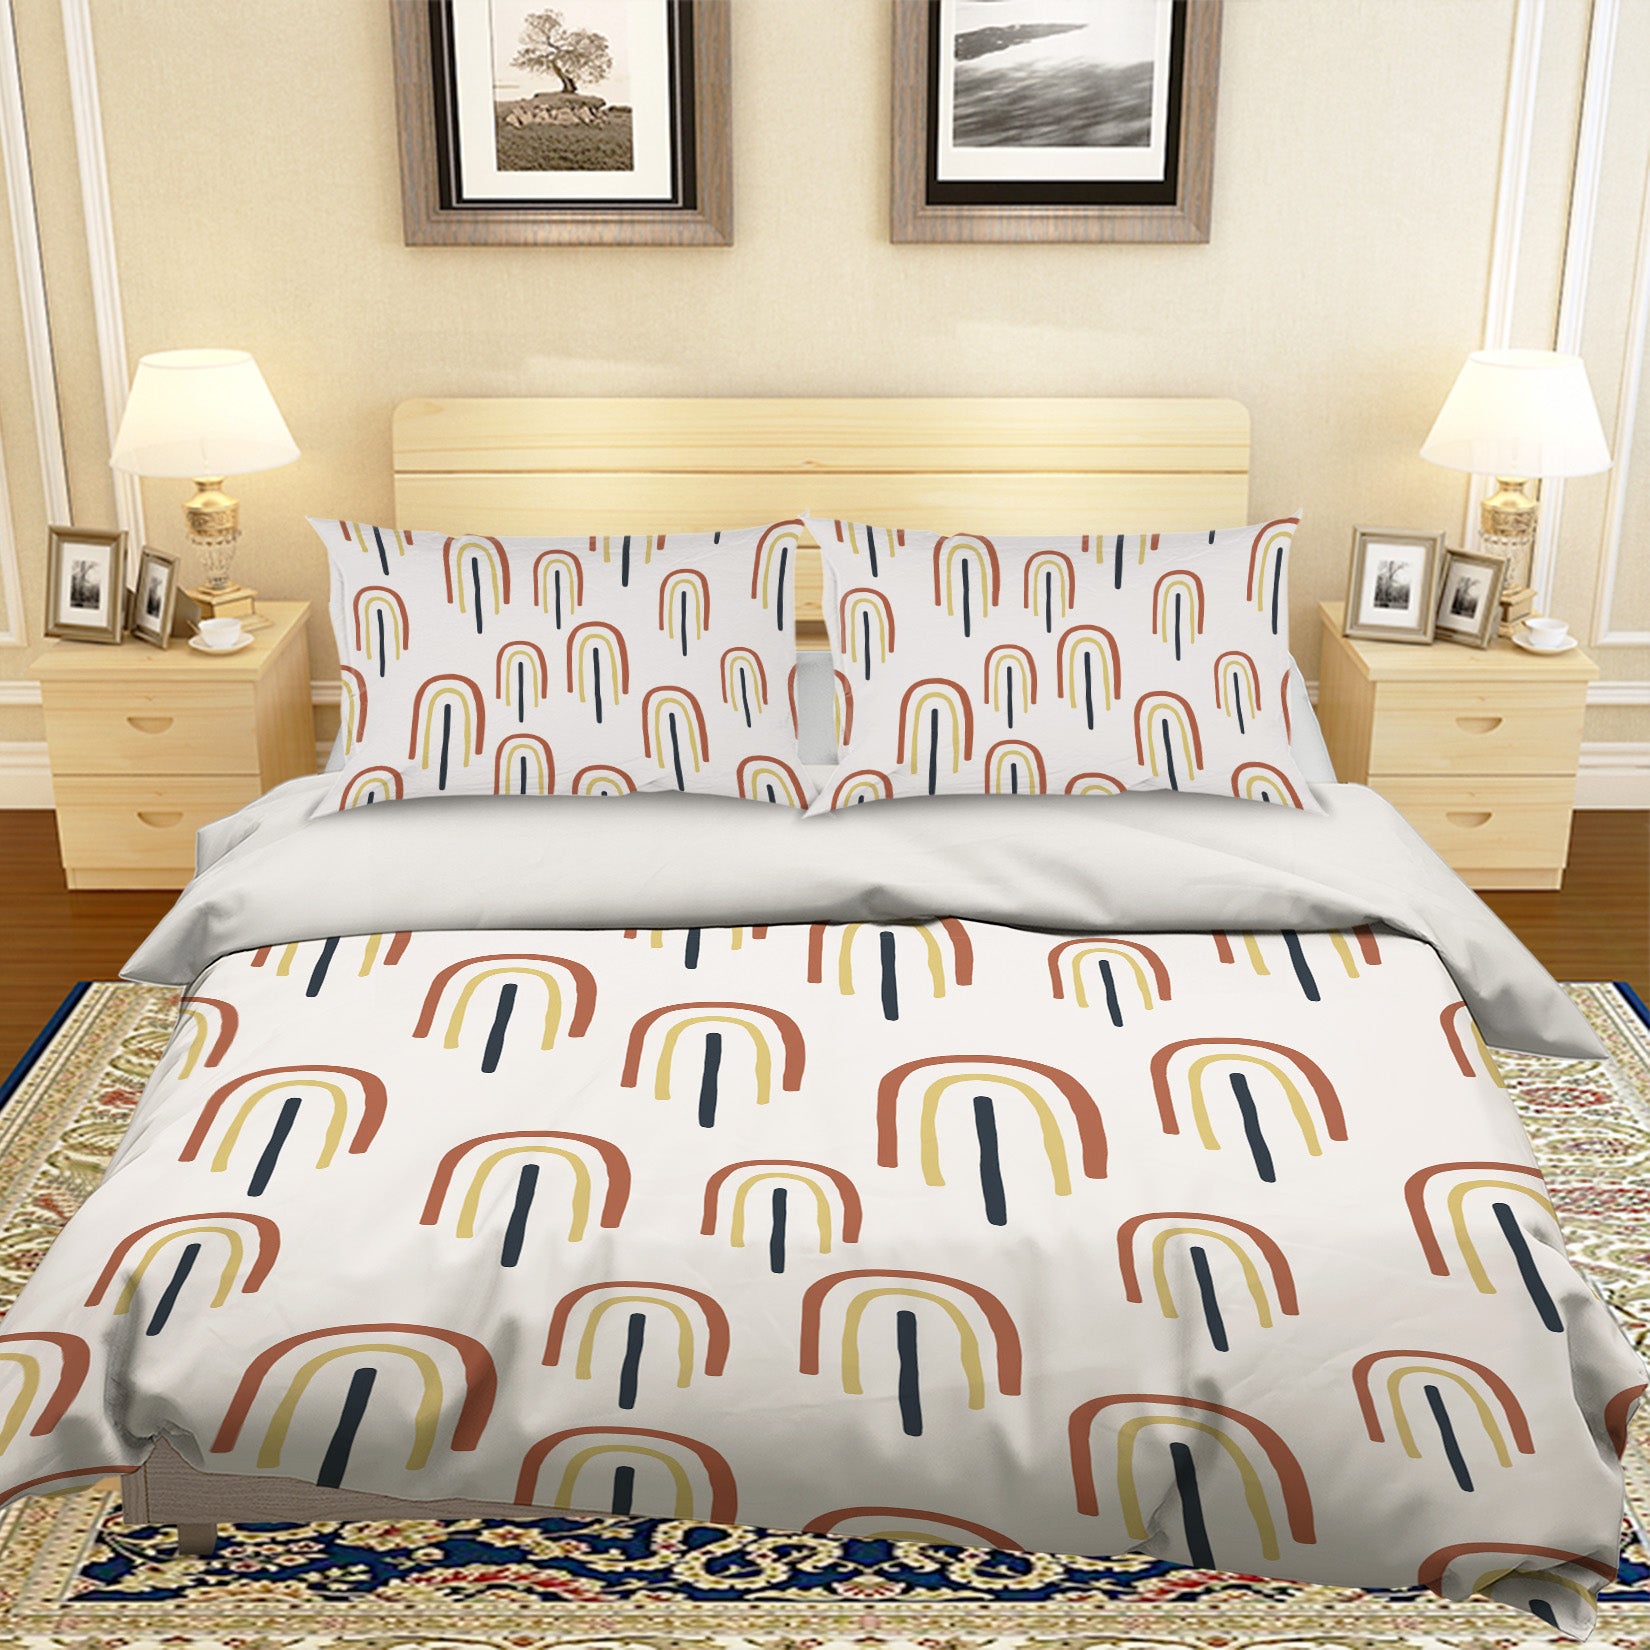 3D Color Painting 229 Uta Naumann Bedding Bed Pillowcases Quilt